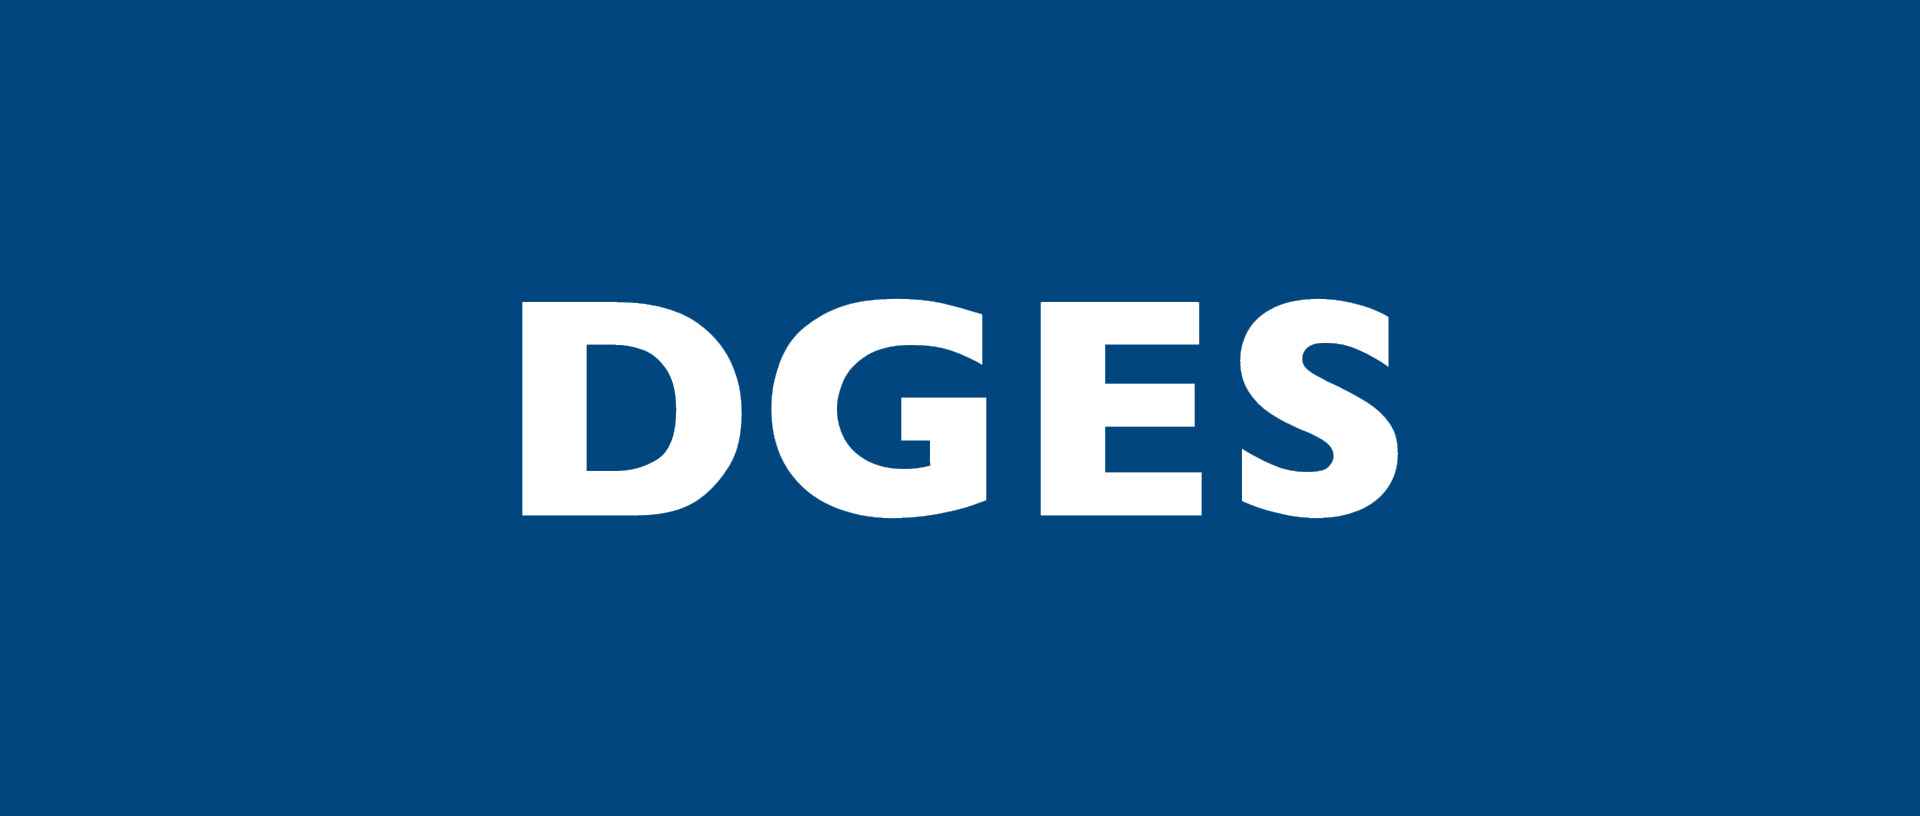 DGES logo - Directorate General for Higher Education